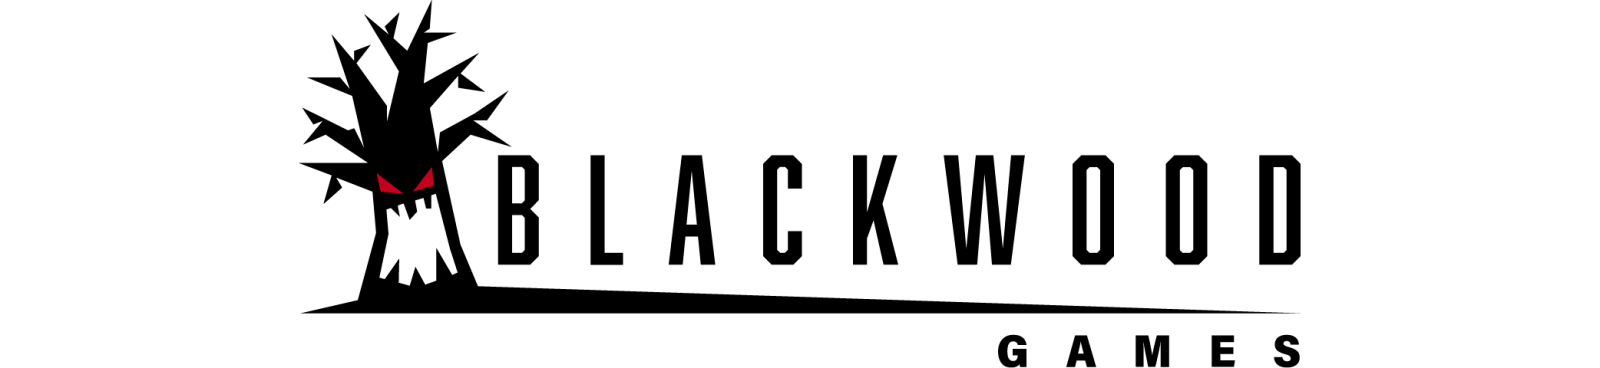 Blackwood Games - Official Logo